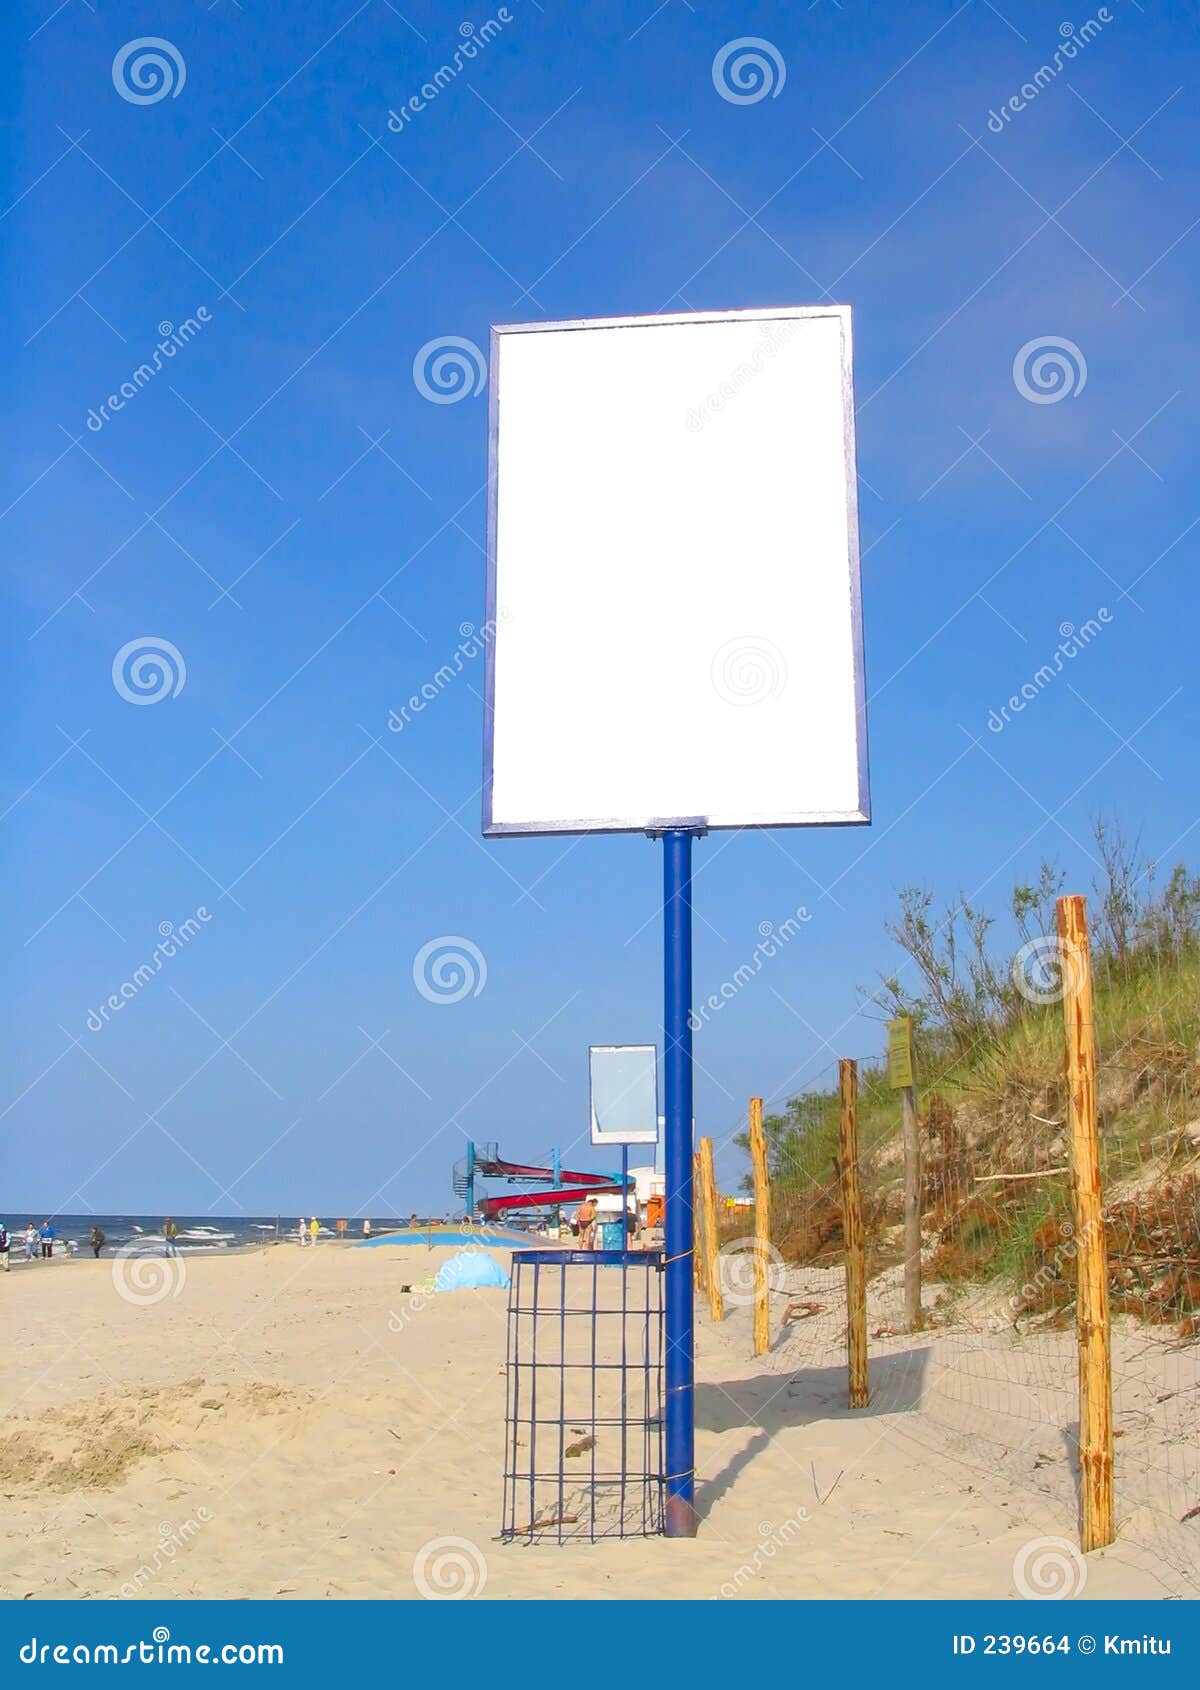 empty beach advert